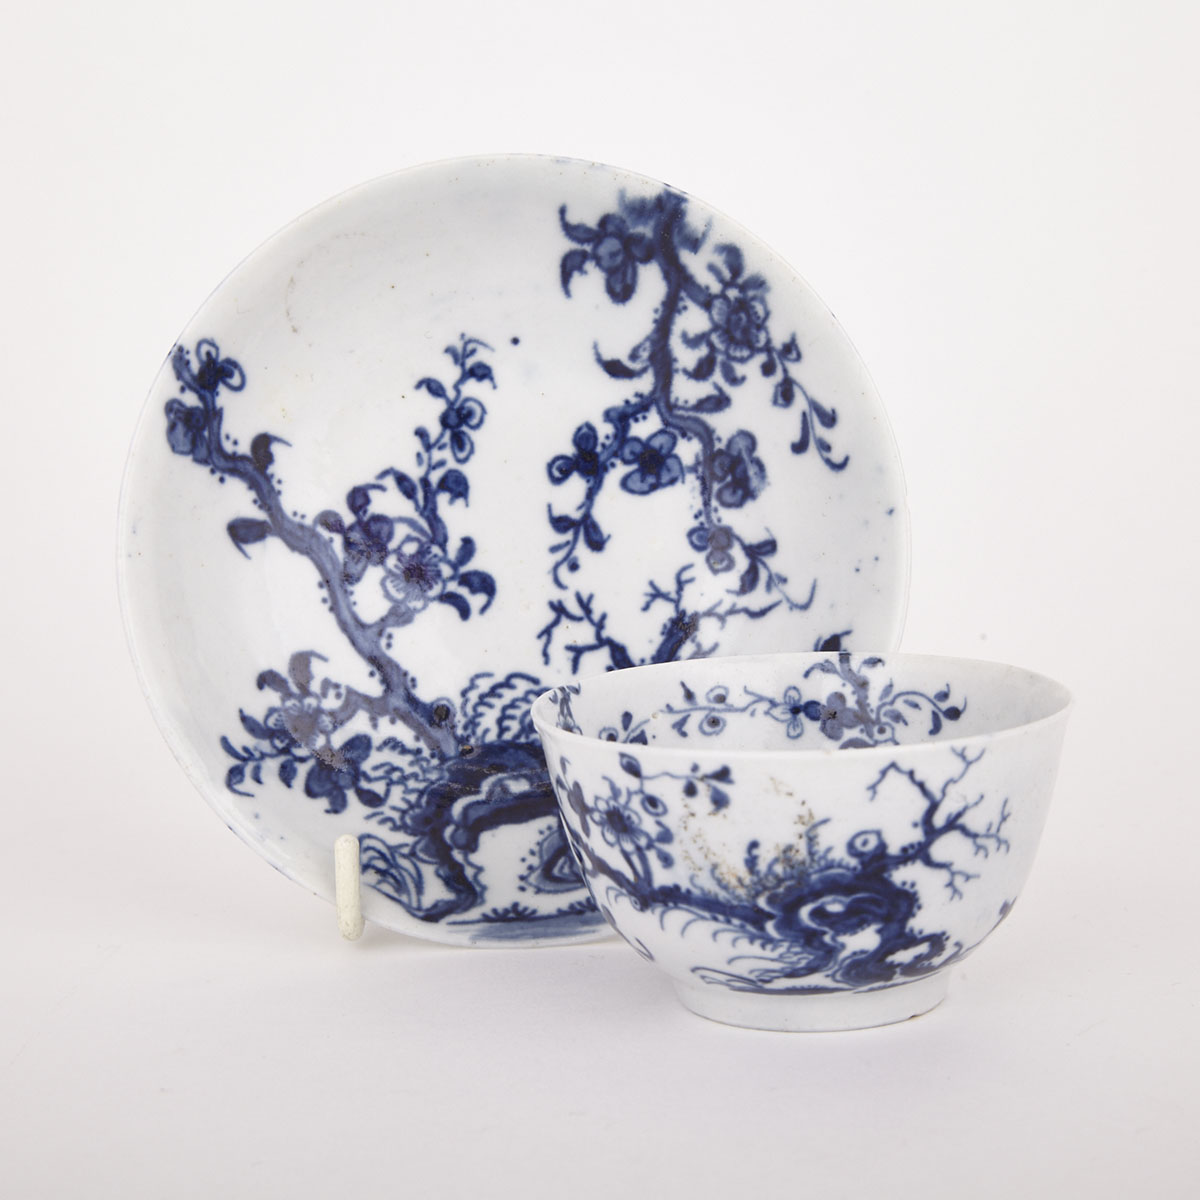 Worcester ‘Prunus Root’ Tea Bowl and Saucer, c.1752-80